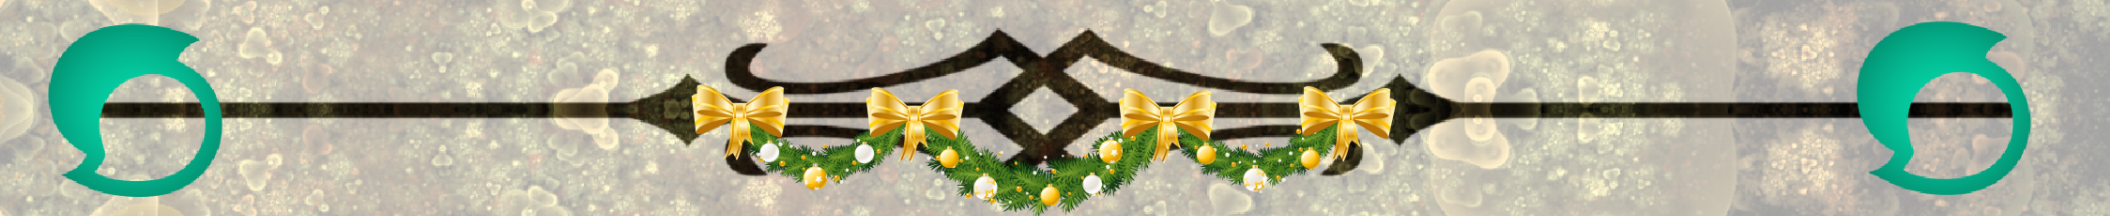 Christmas banner.png